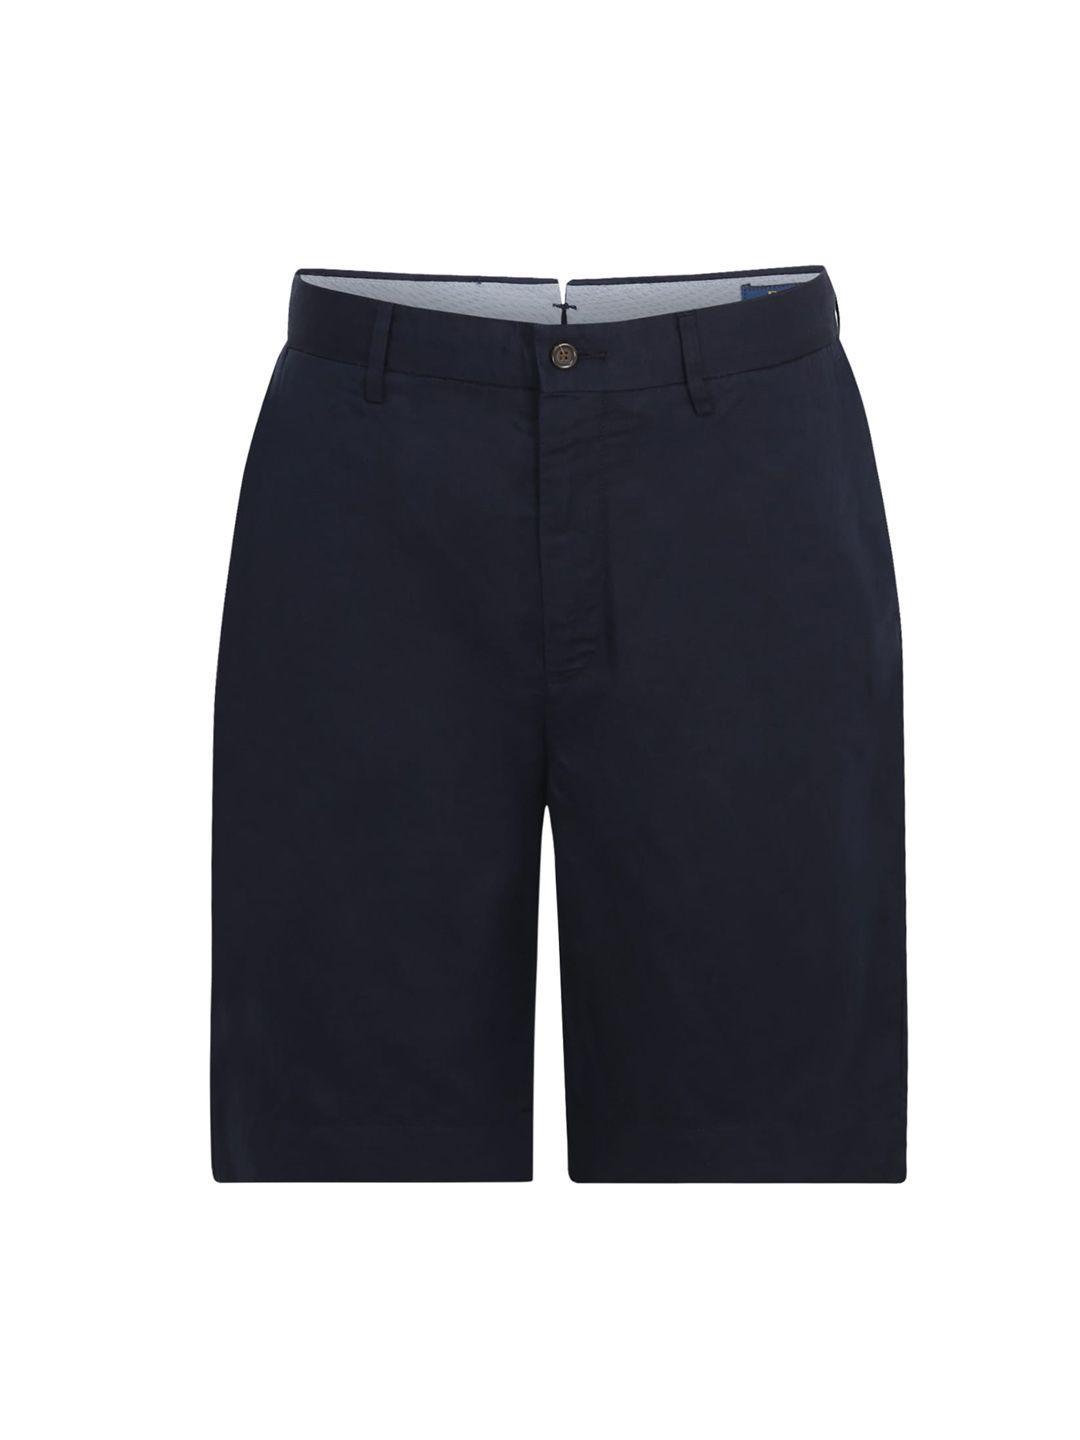 polo-ralph-lauren-men-mid-rise-cotton-chinos-shorts